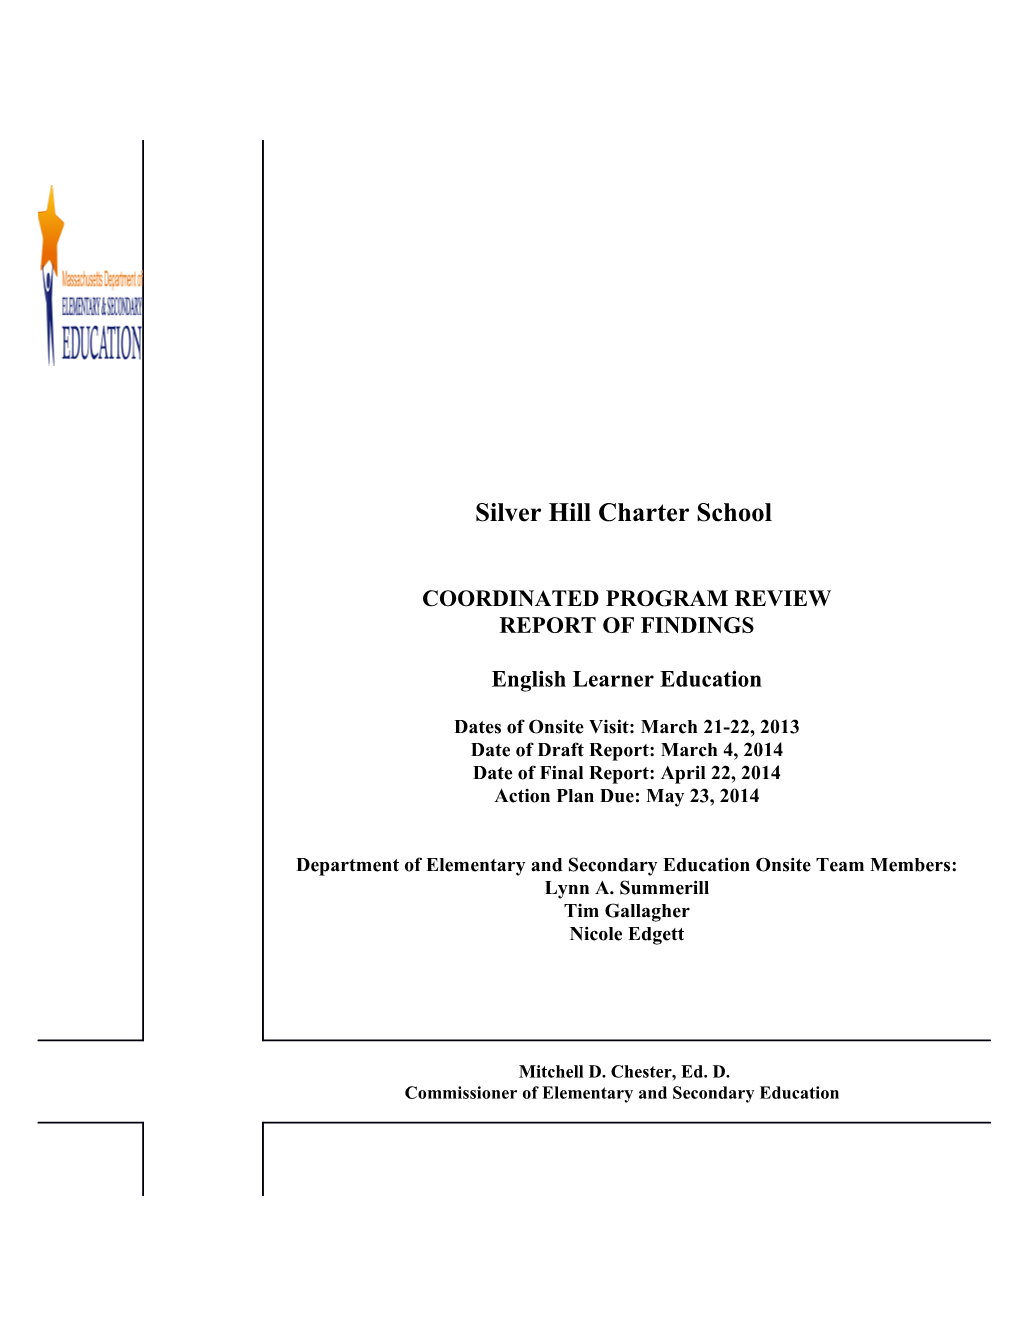 Silver Hill Charter School CPR Final Report 2012-2013